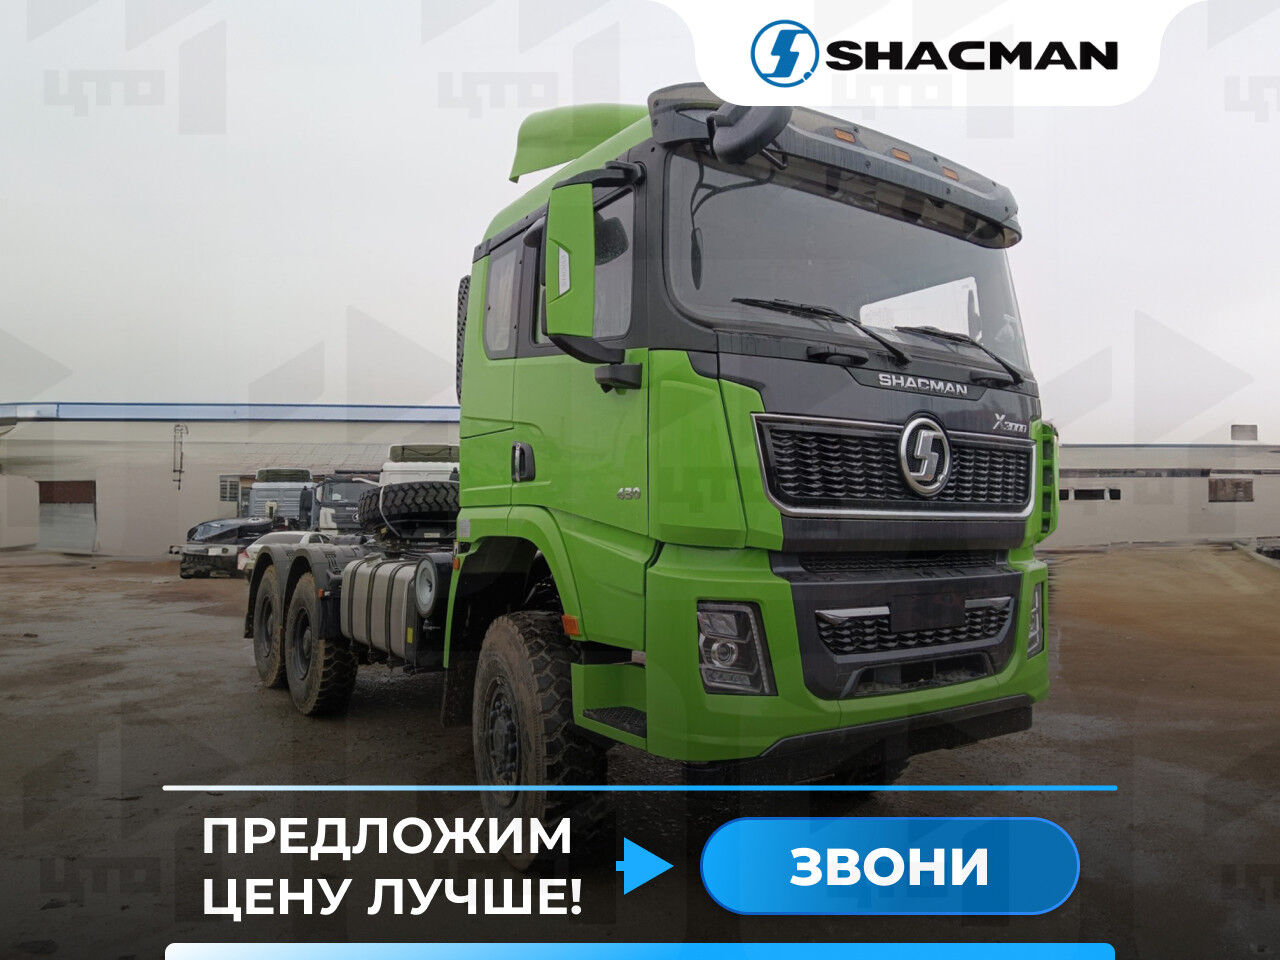 Тягач Shacman SX42586V385 6x6 430 л.с. green Shacman (Shaanxi)